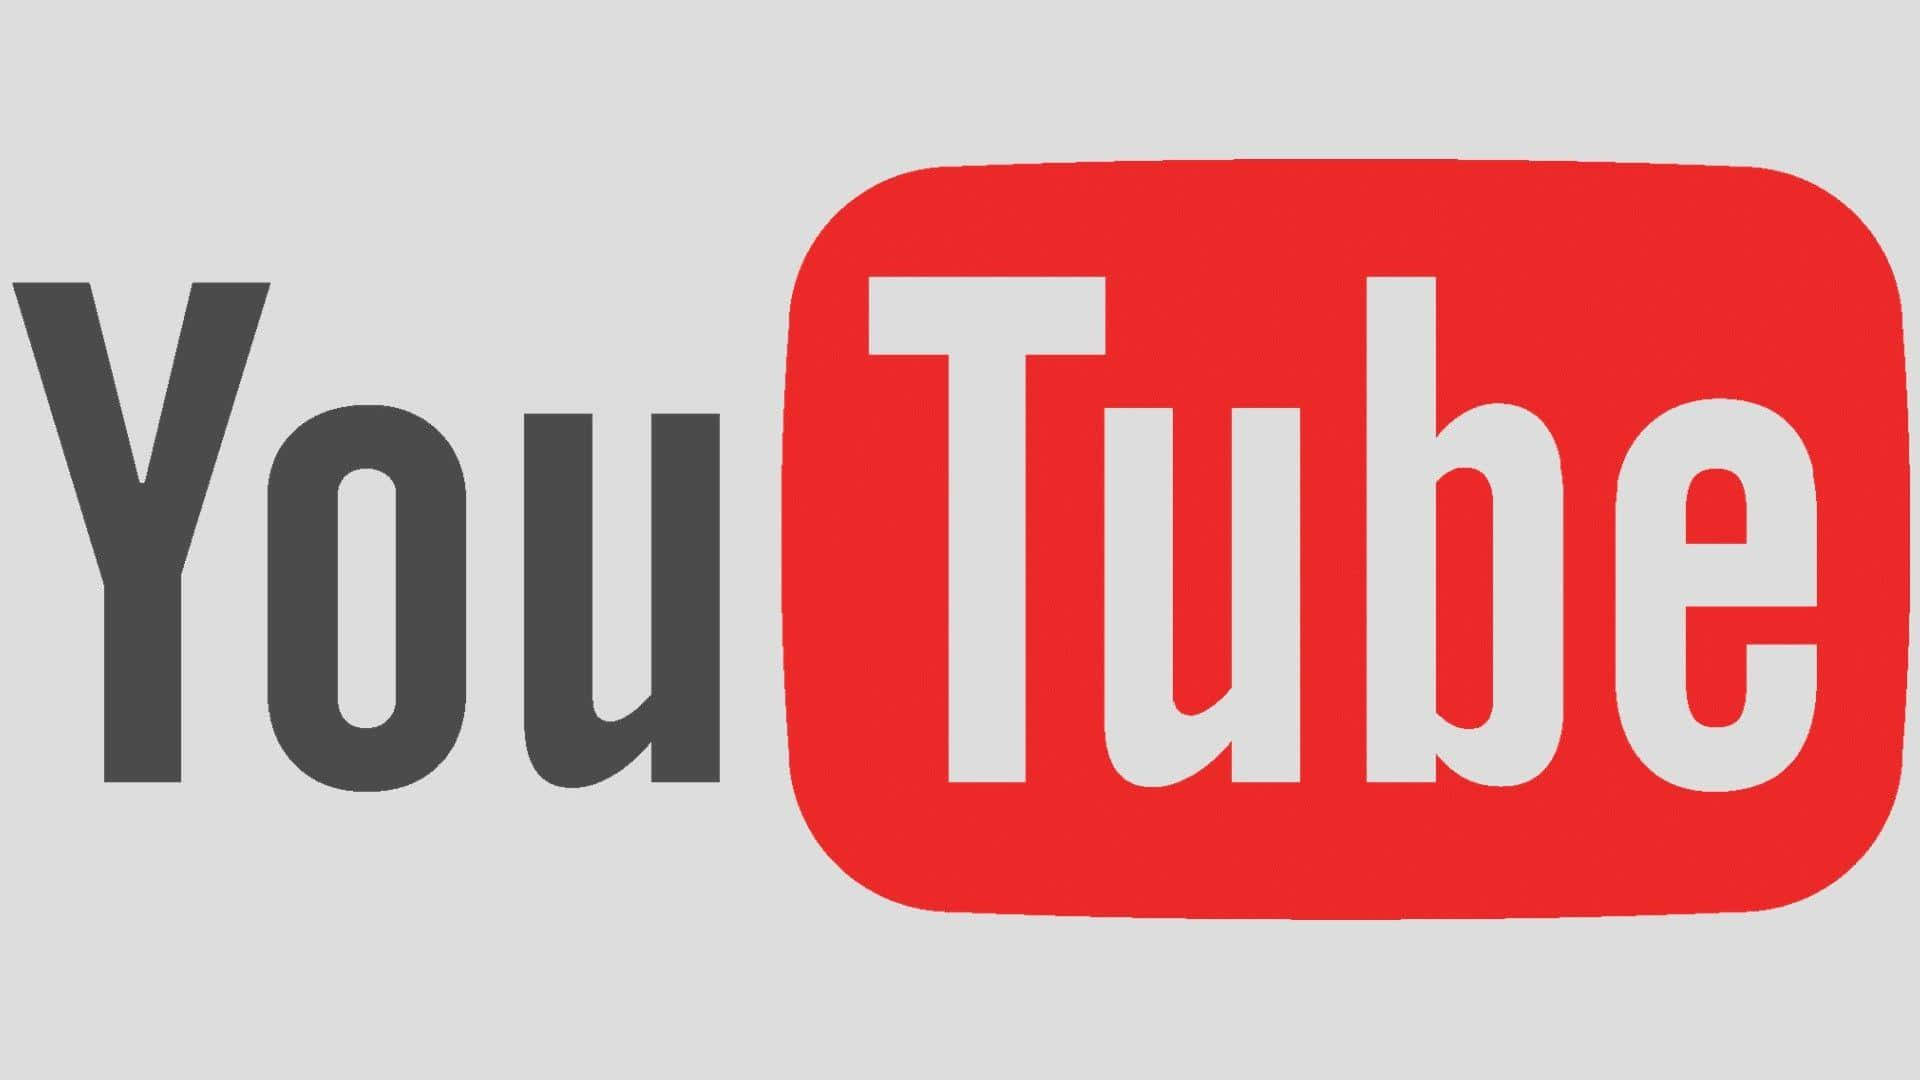 Modern YouTube Logo on Red Background